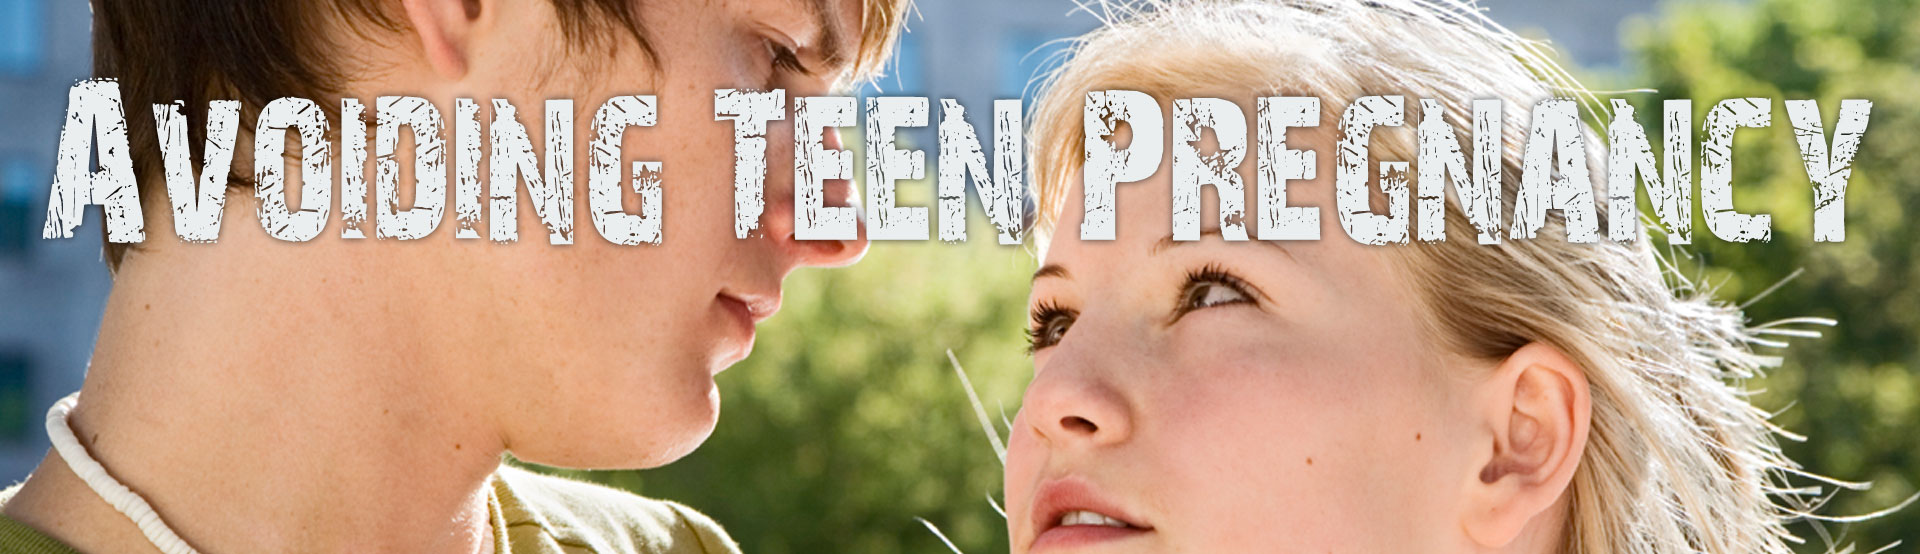 teenage pregnancy topics